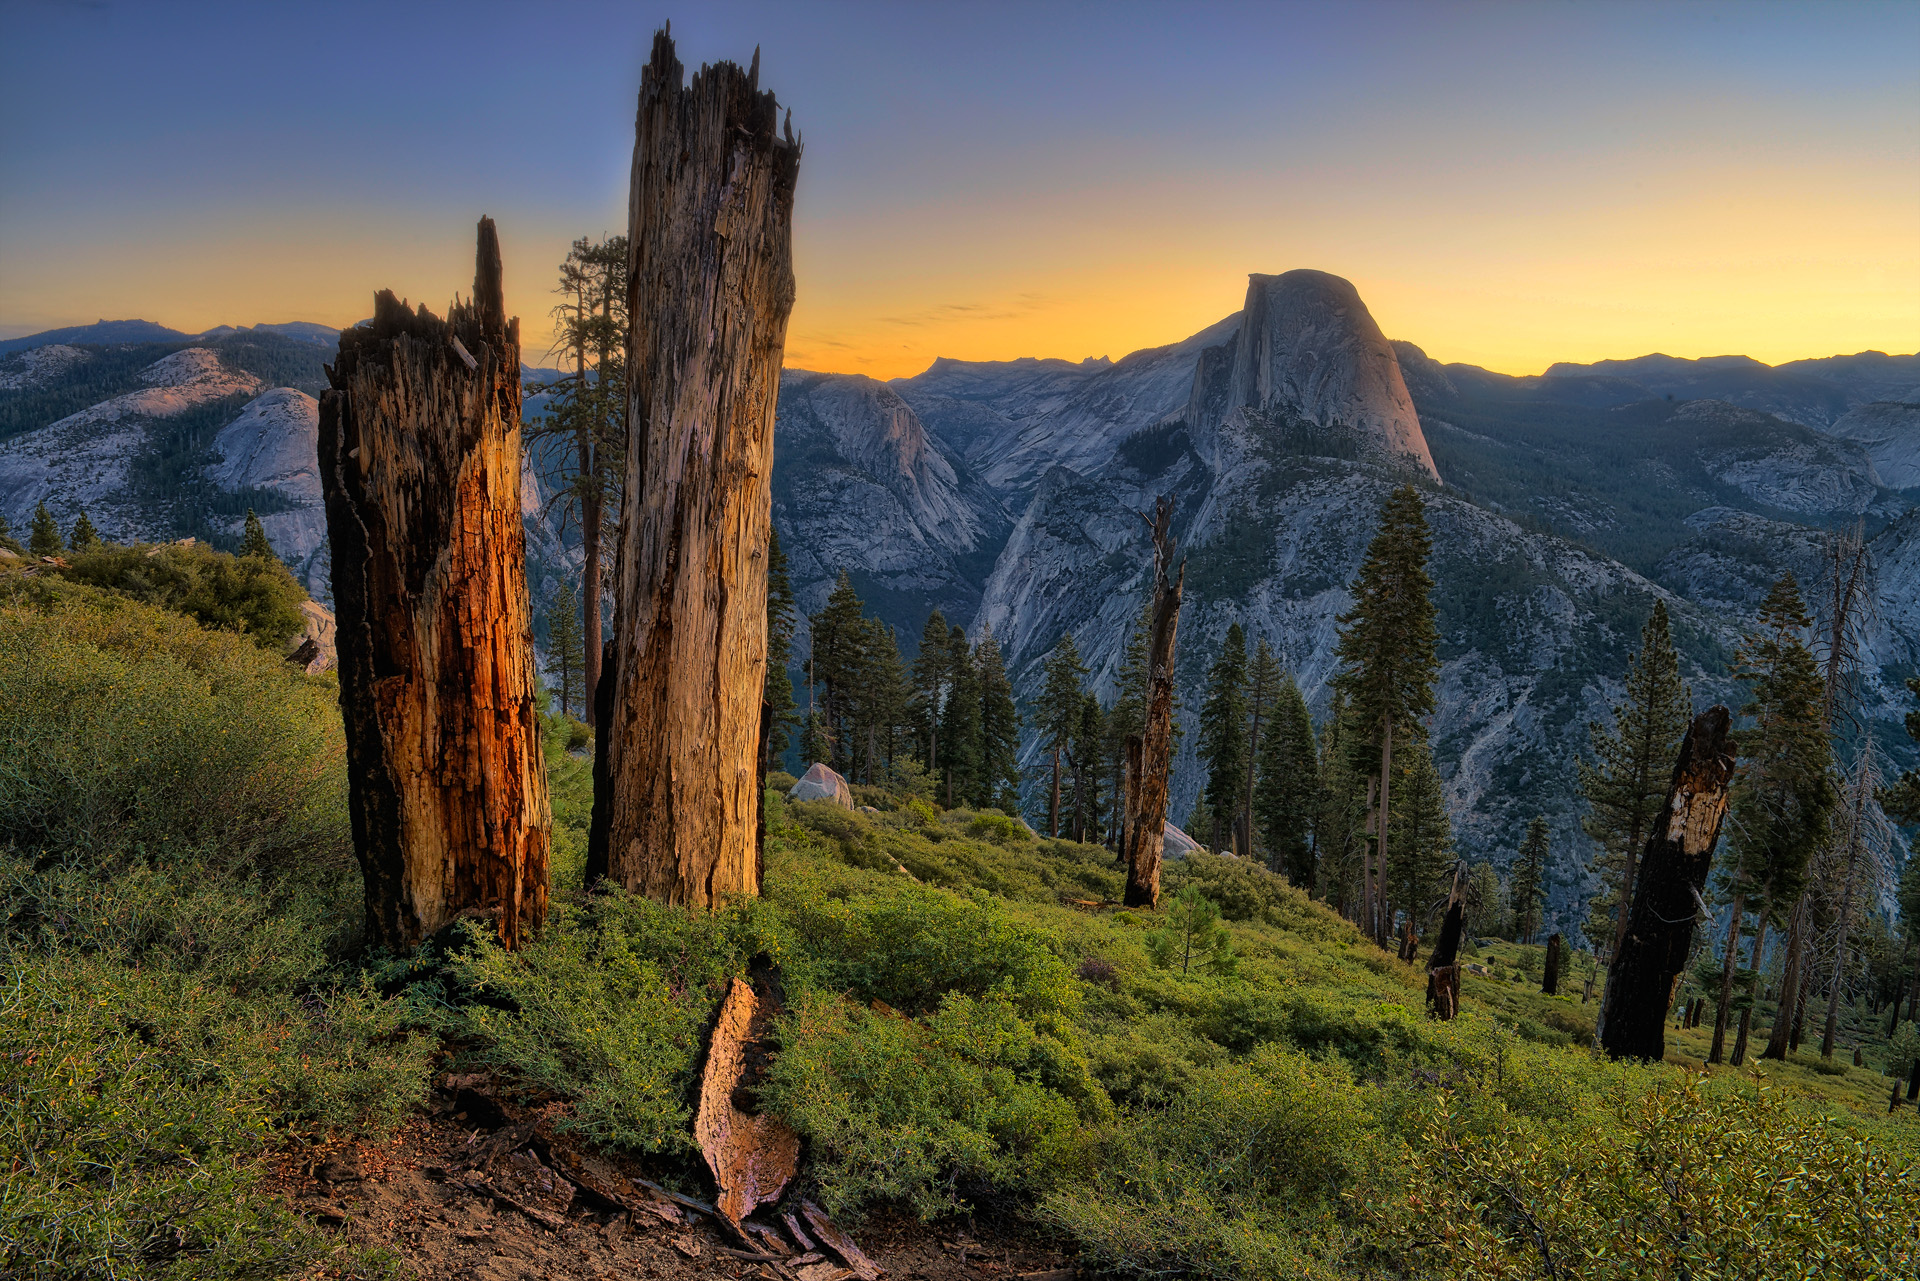 Yosemite Sunrise 4 RAW revised .......